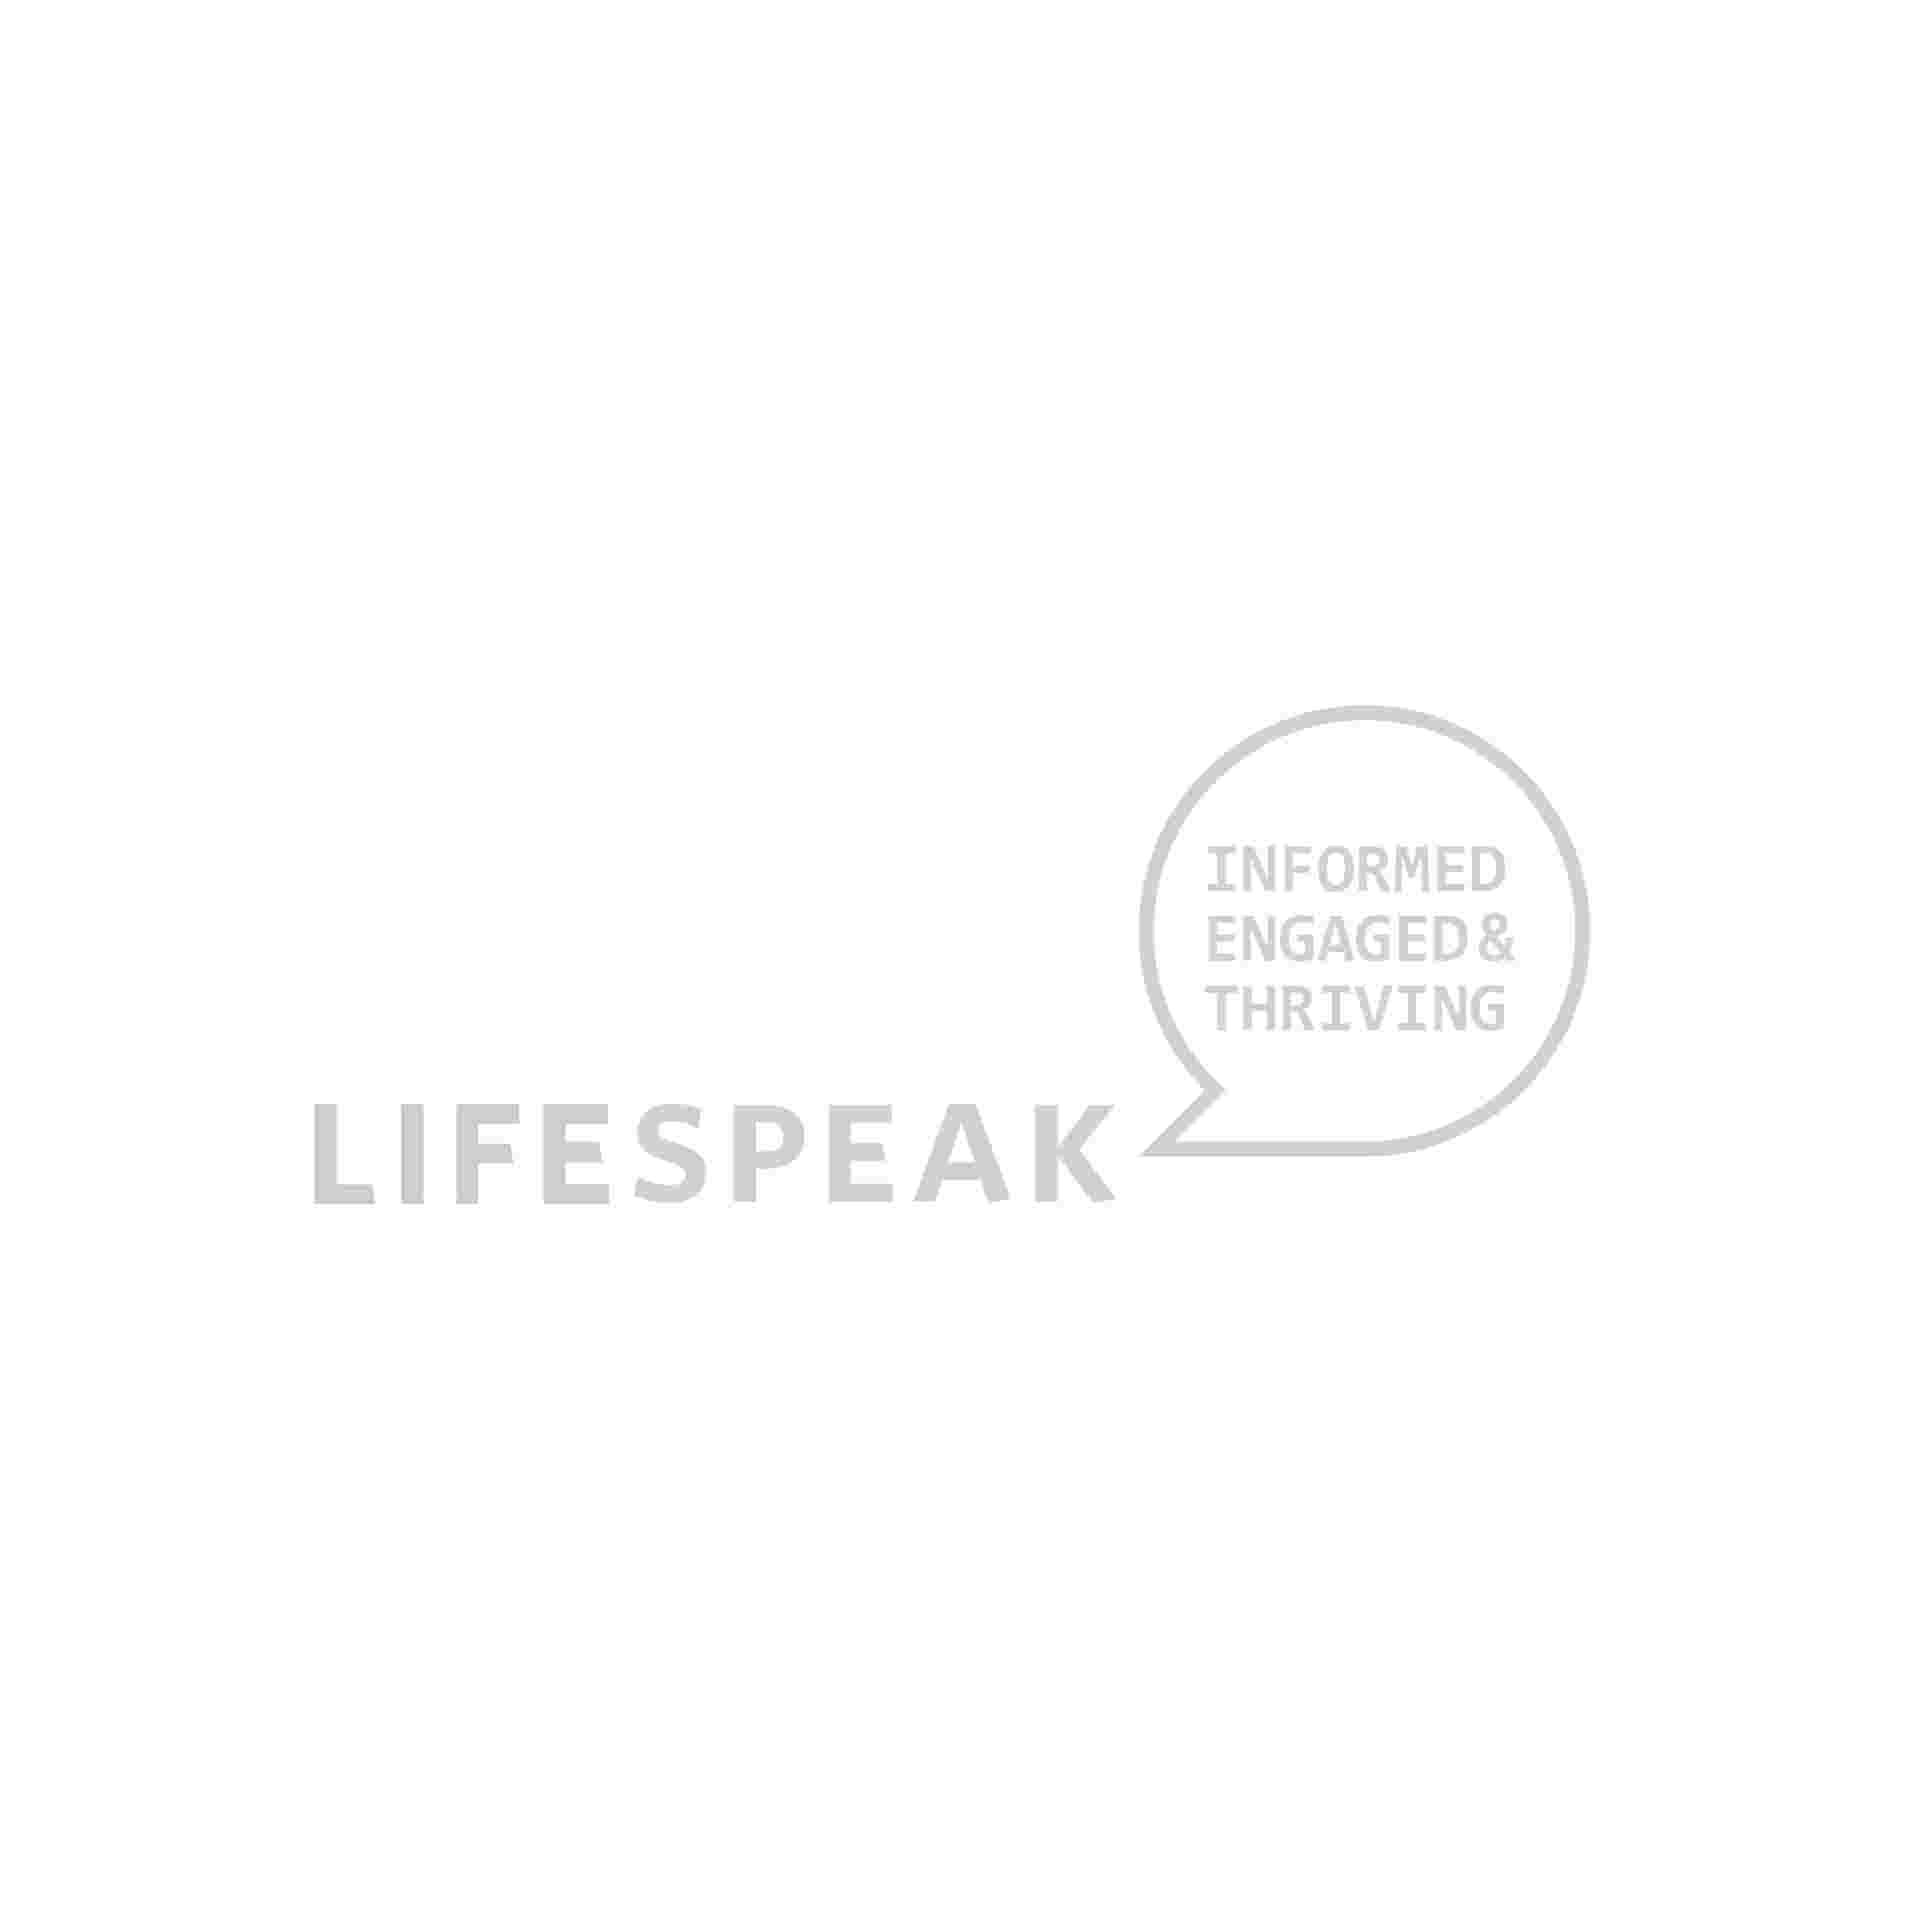 Lifespeak - feature_Lifespeak_logo8_2400px